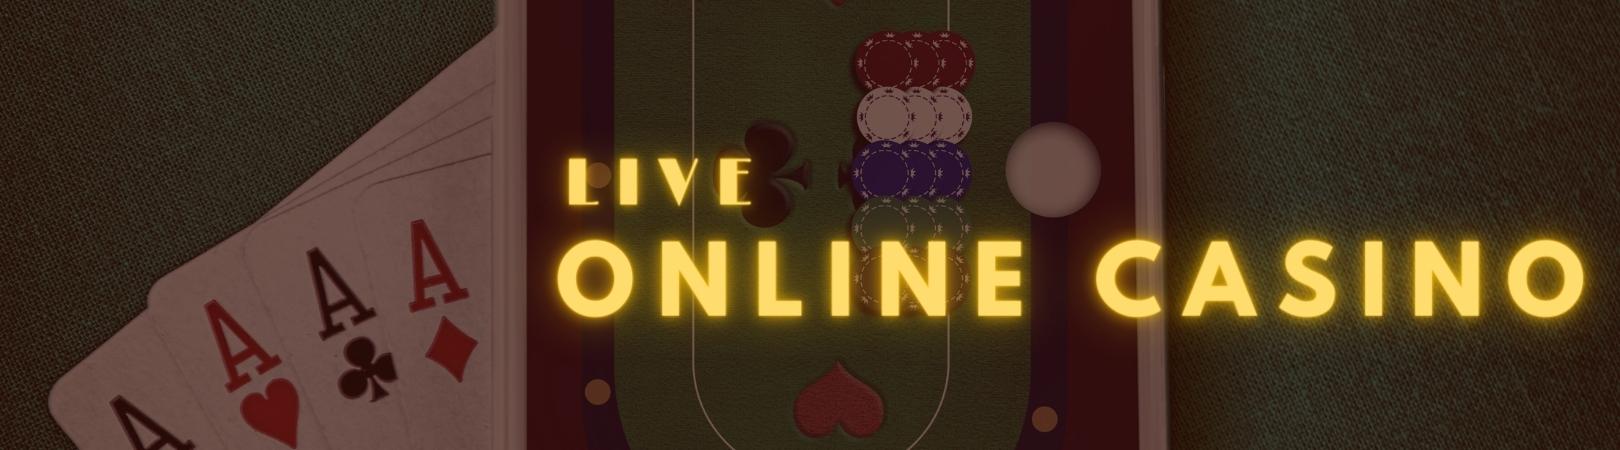 Live online casino img